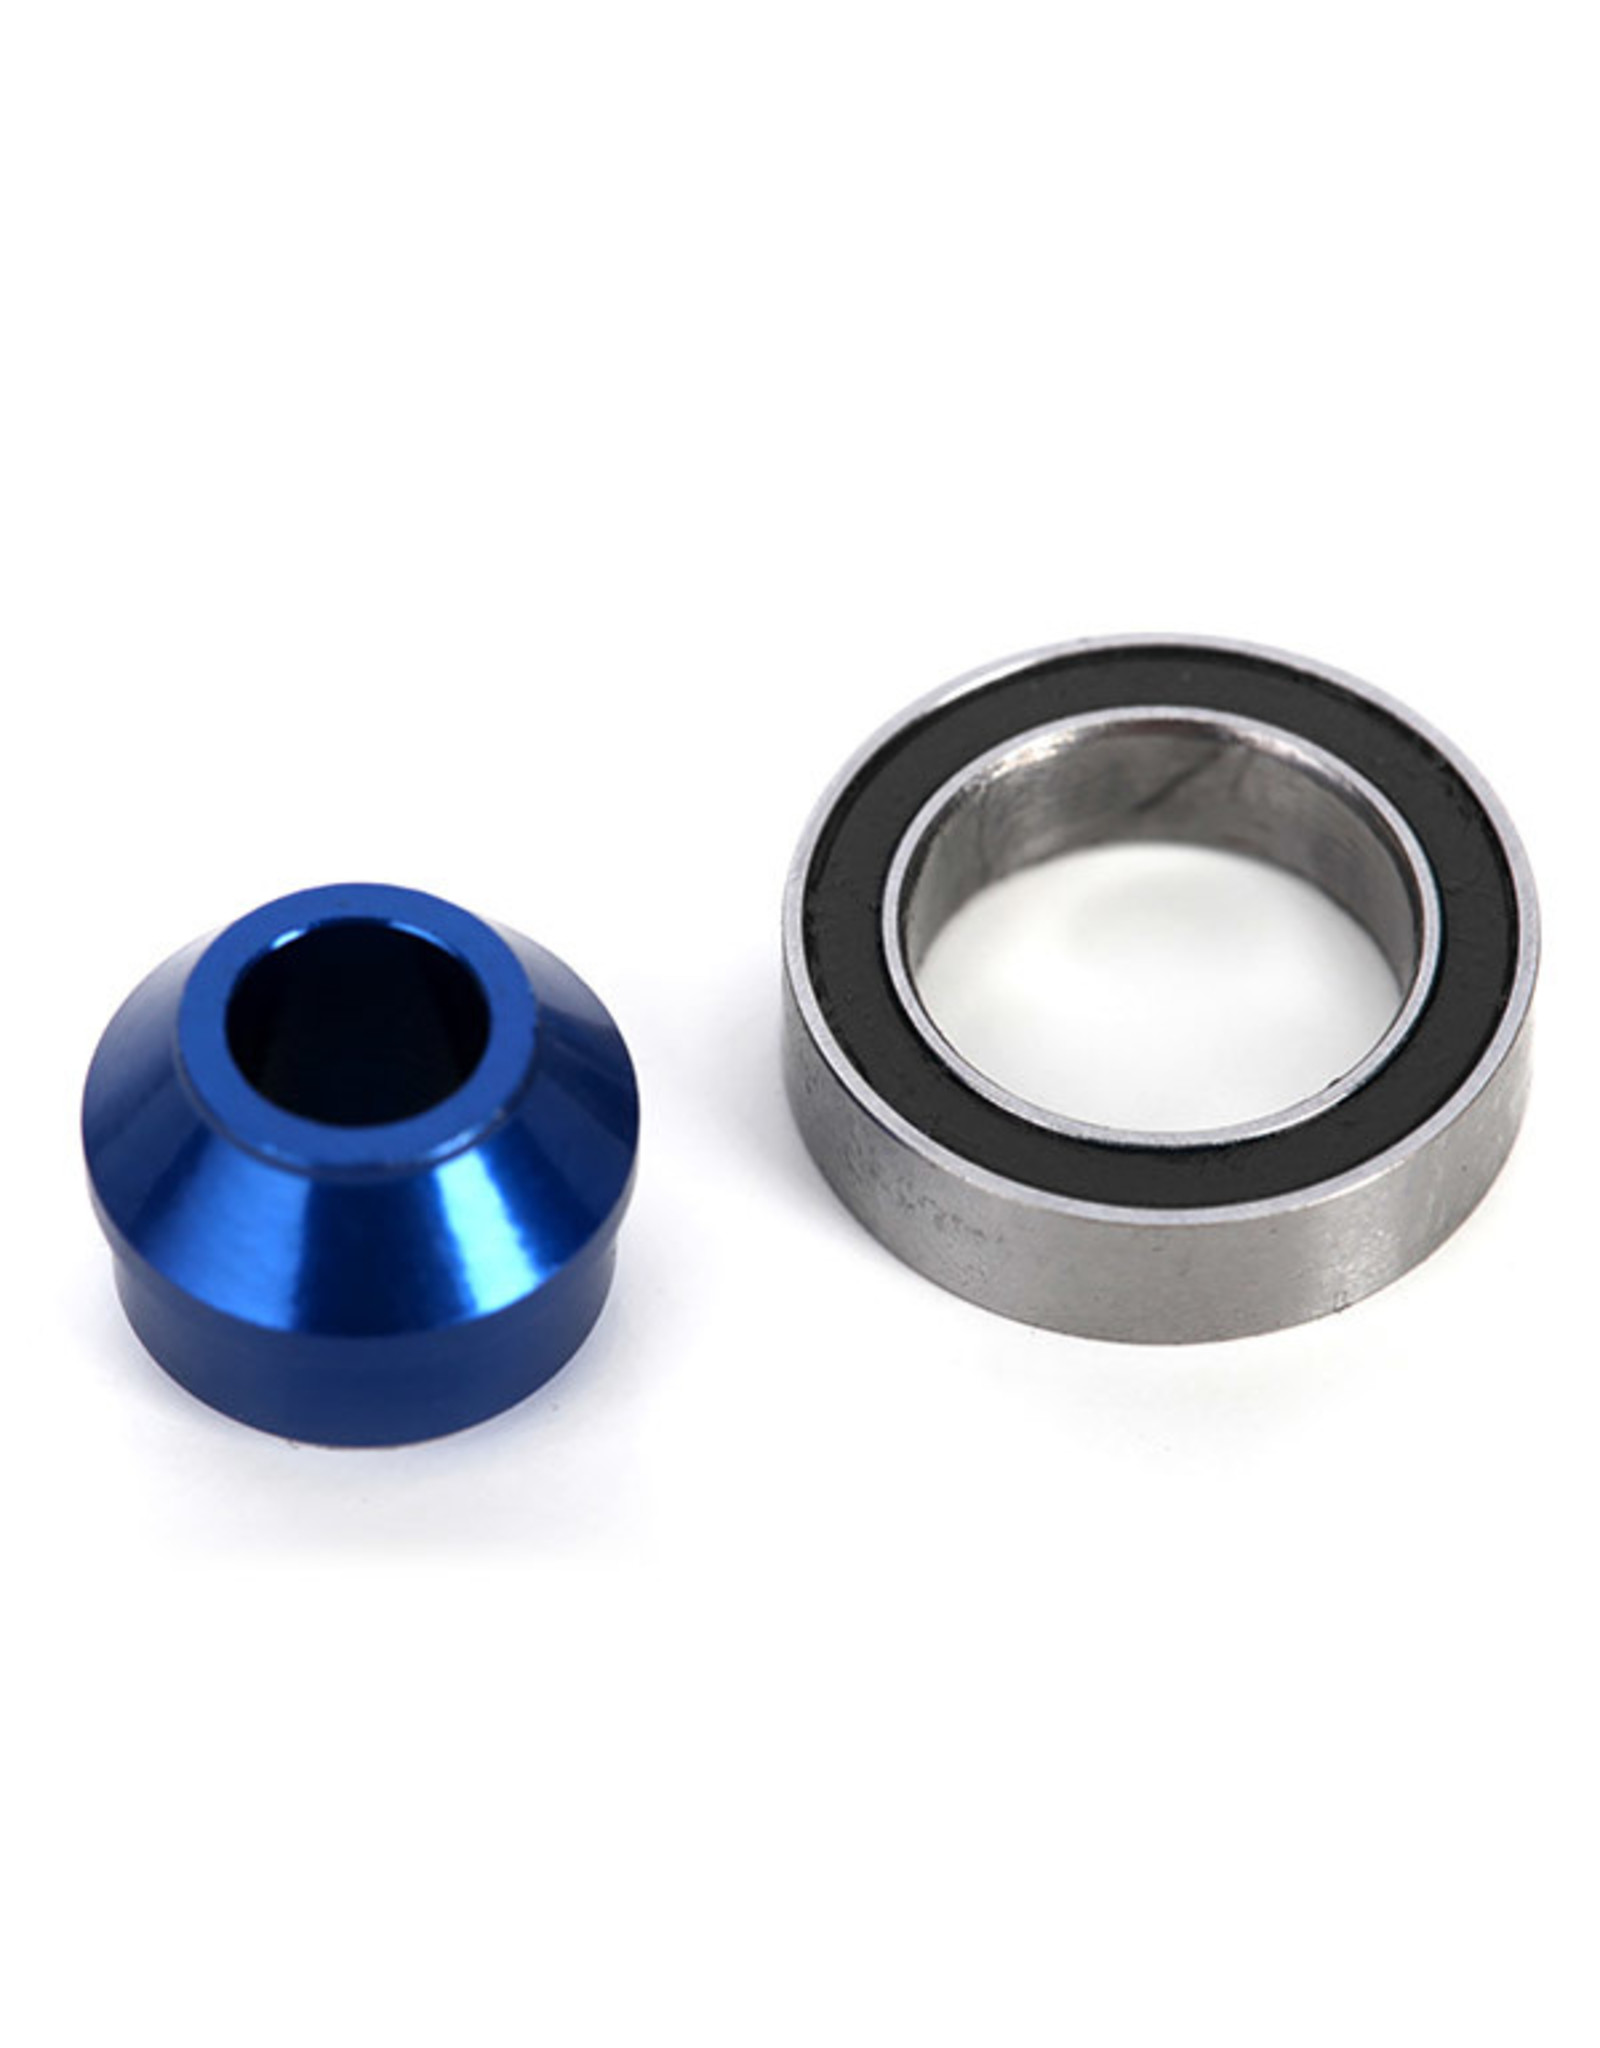 Traxxas Bearing adapter, 6061-T6 aluminum (blue-anodized) (1)/10x15x4mm ball bearing (black rubber sealed) (1) (for slipper shaft)